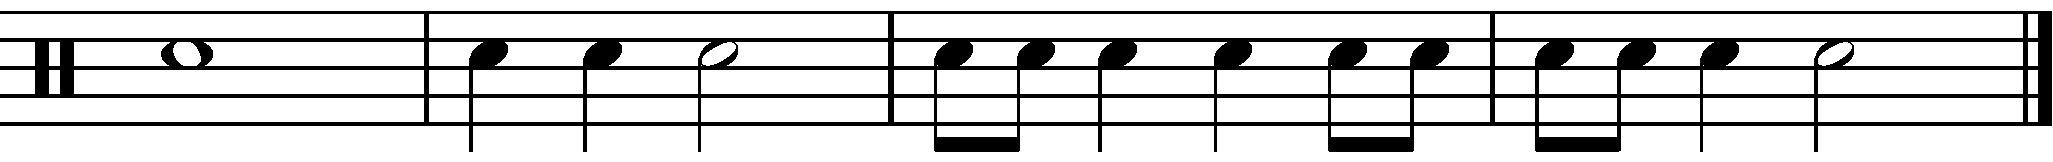 A four bar example snare drum rhythm.